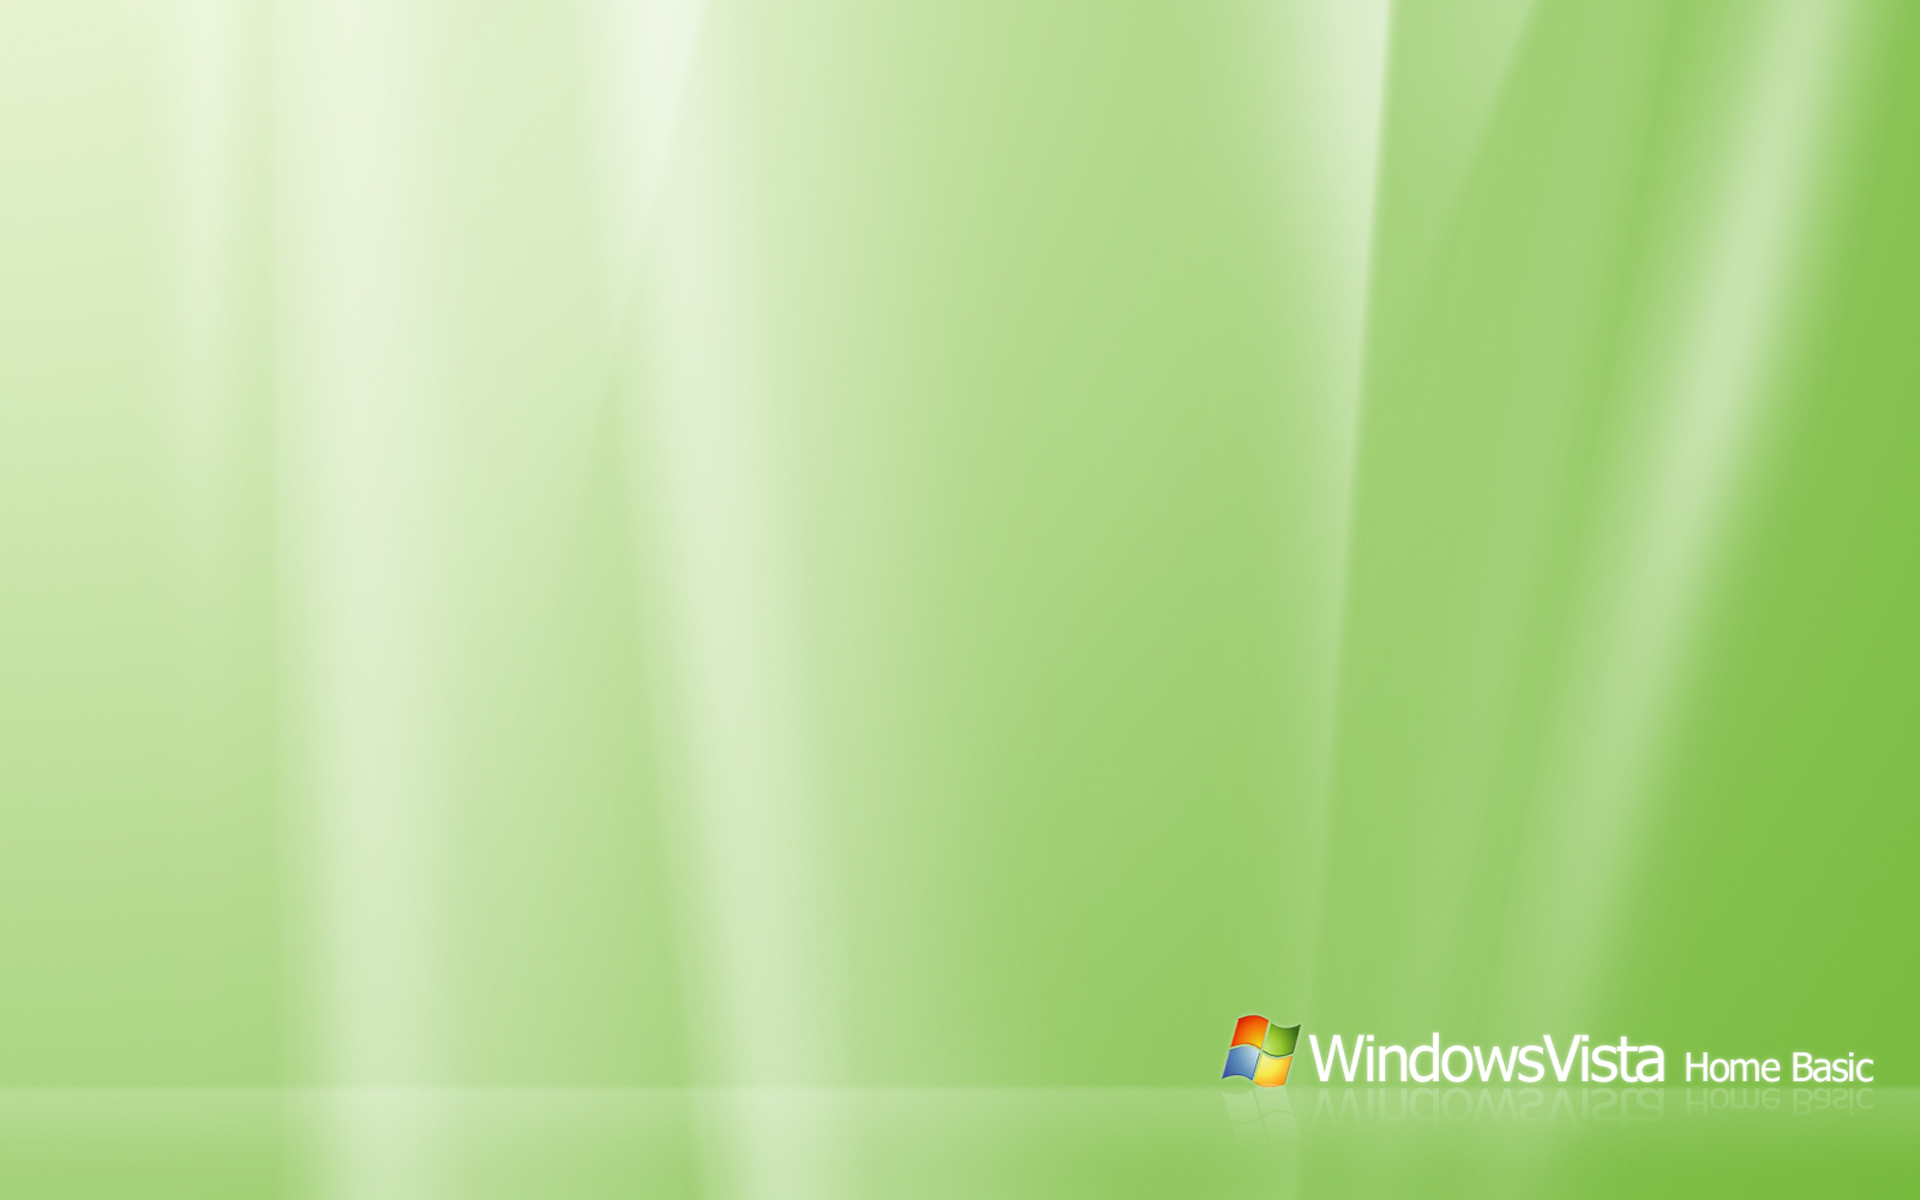 Windows Vista Home Basic Hd Wallpaper